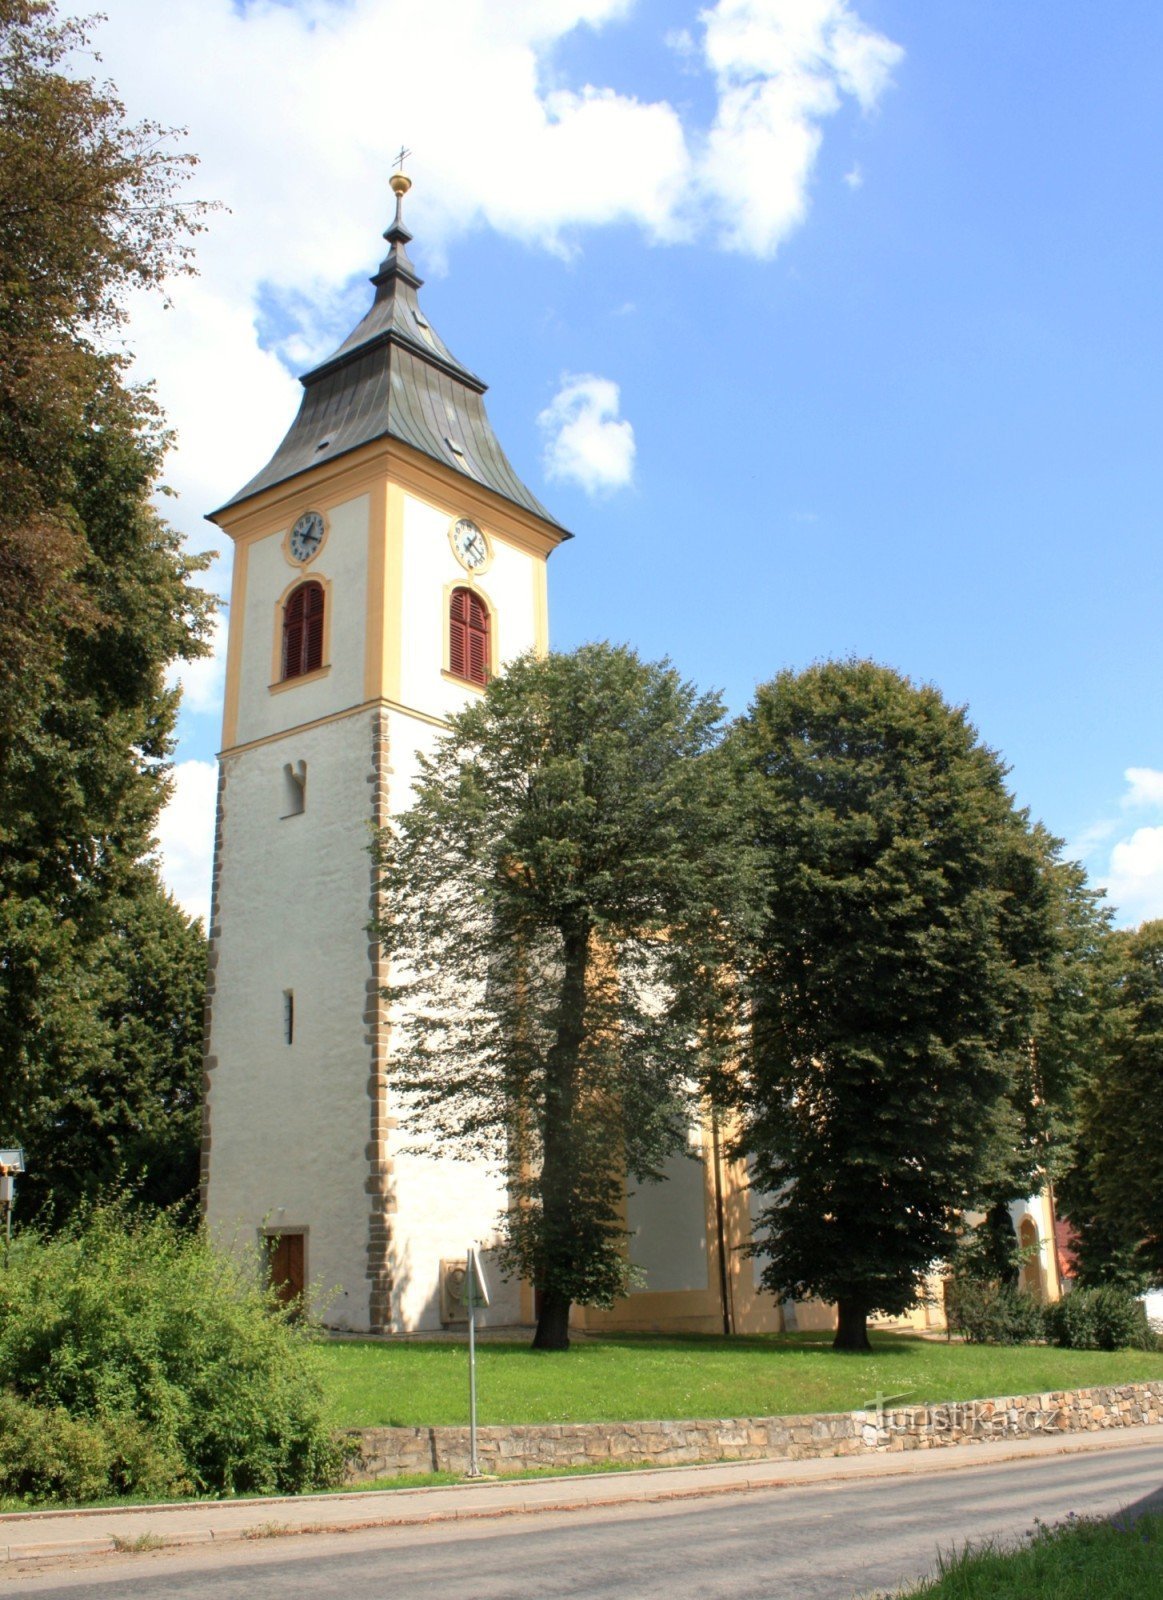 Luka nad Jihlavou - church of St. Bartholomew